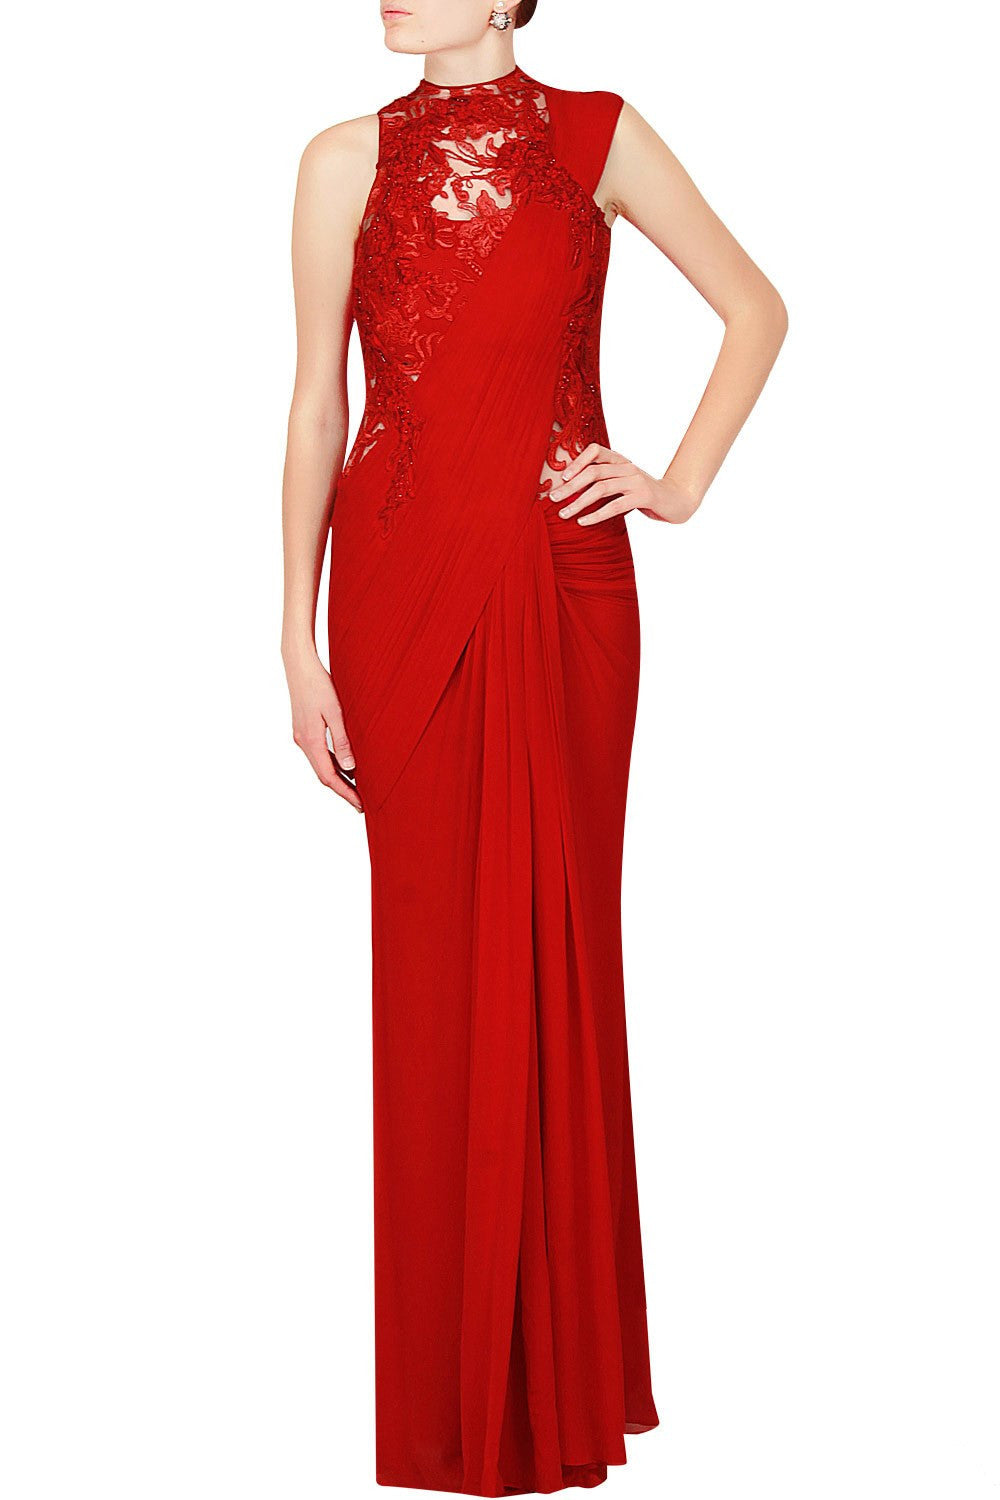 Red Colour Crepe Designer Saree Gown Online